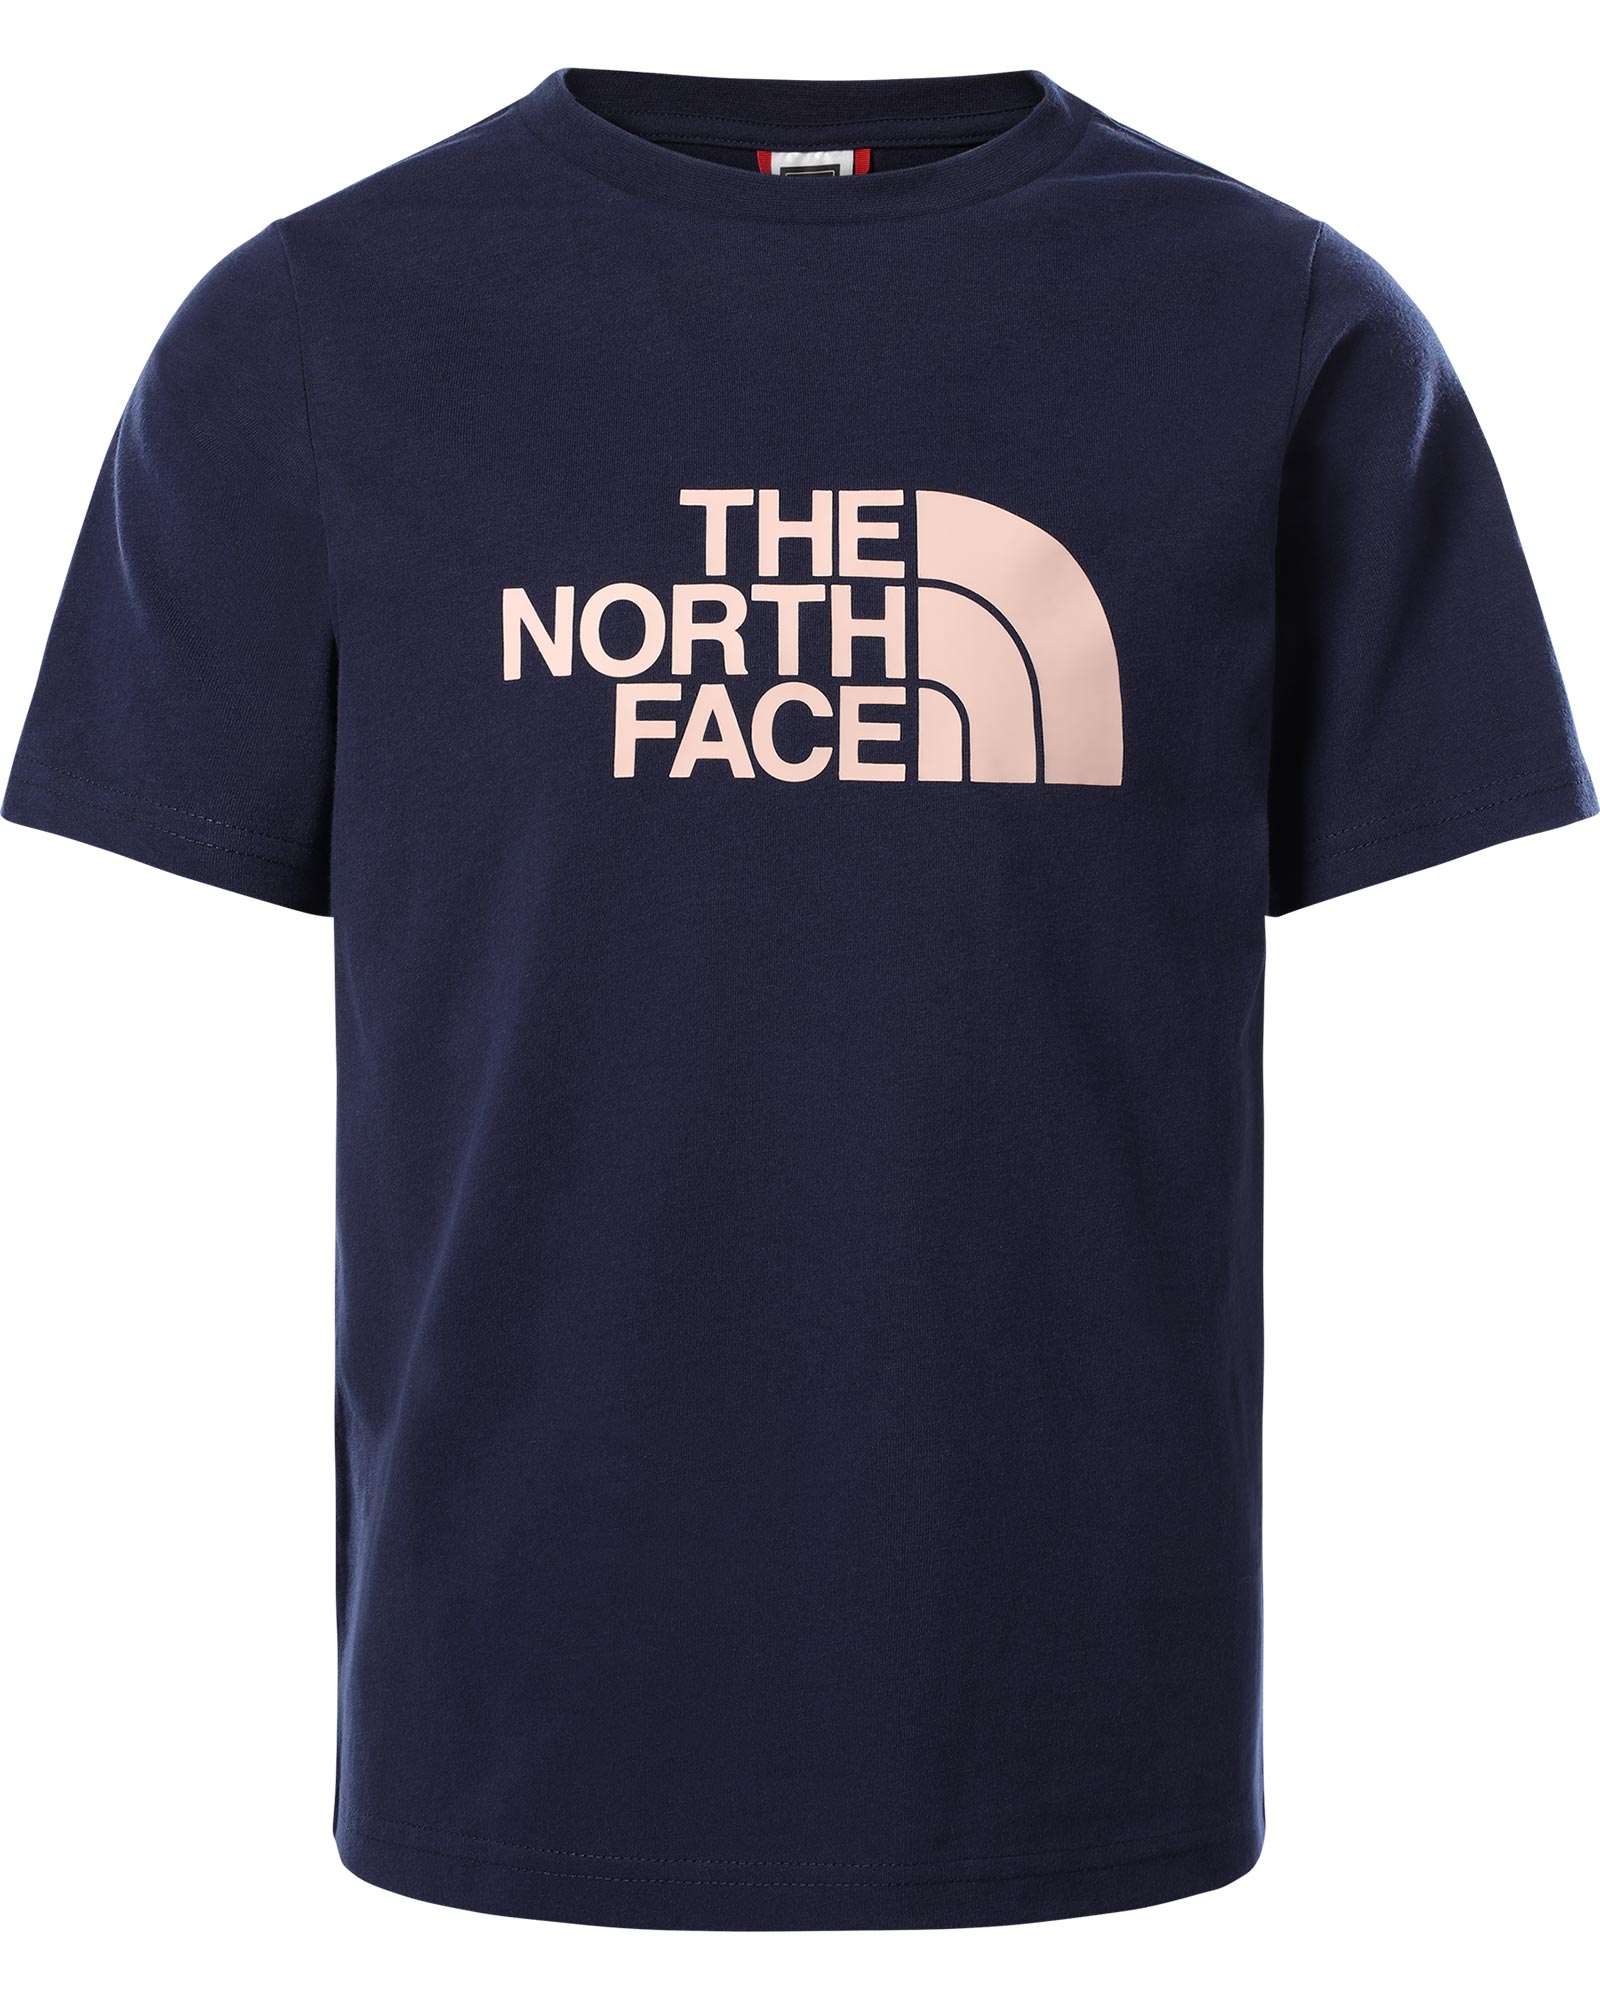 The North Face Easy Boyfriend Girls T-shirt